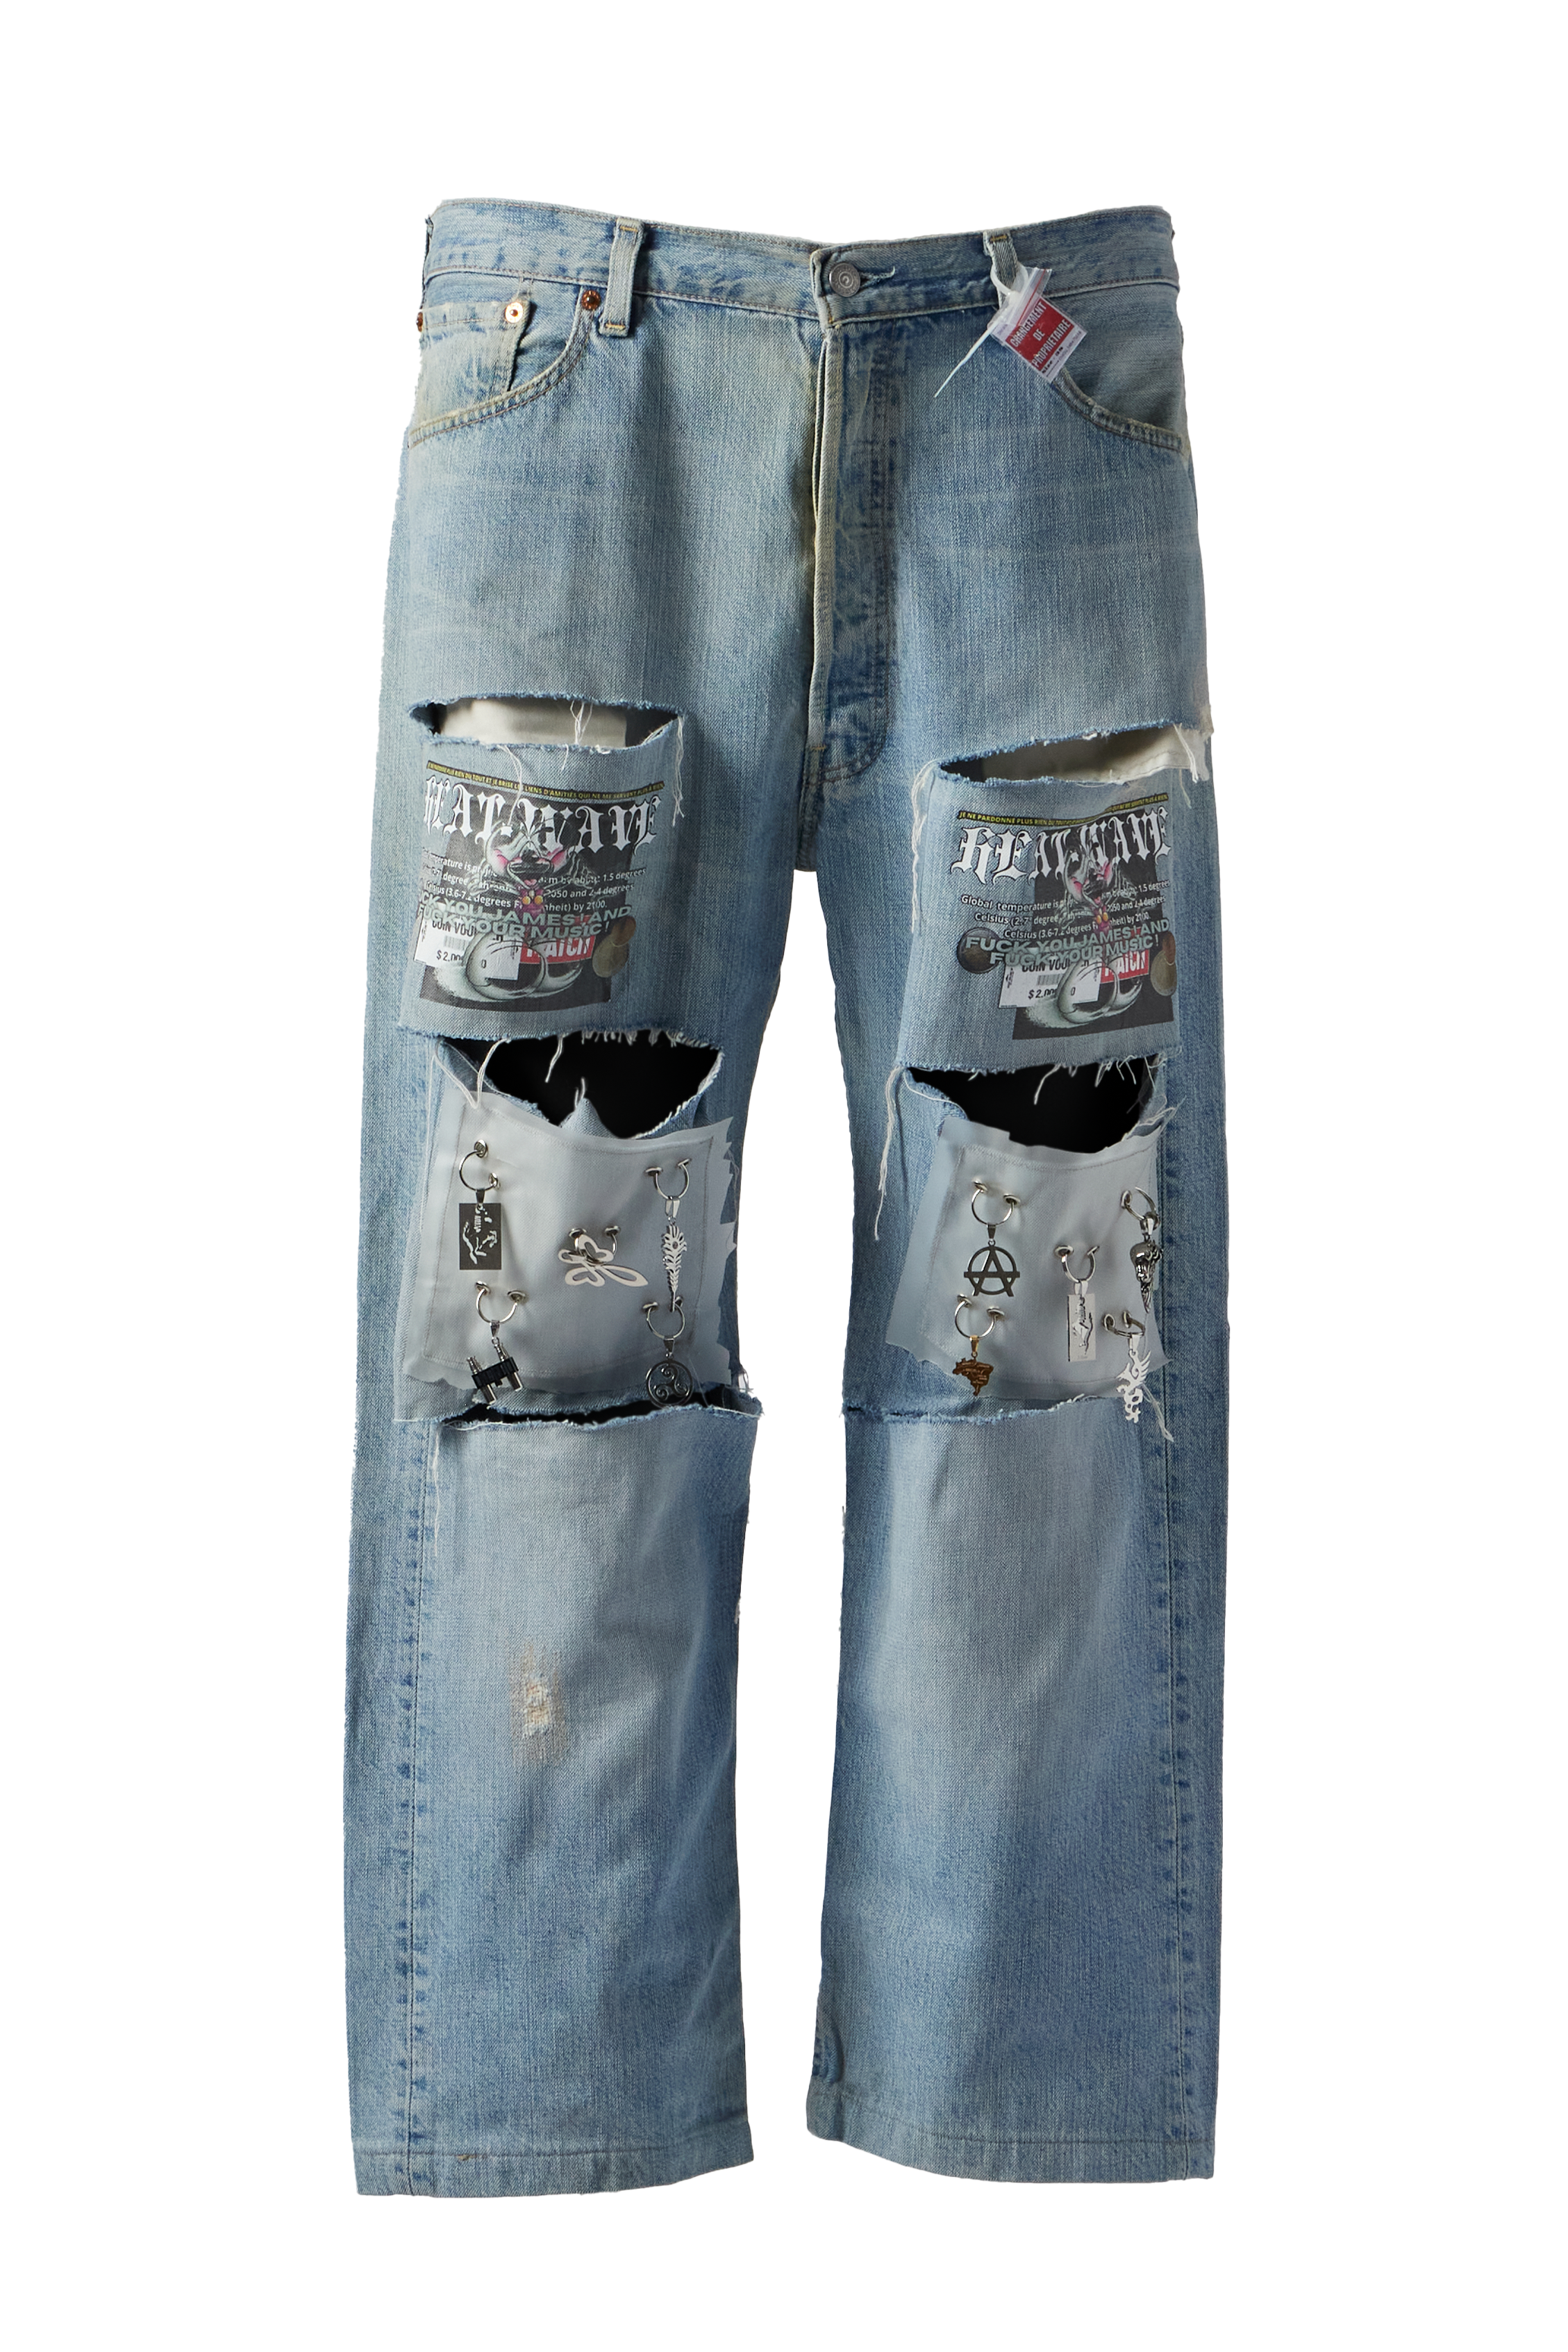 COUCOU_BEBE75018 - Heat Wave Denim Jeans product image